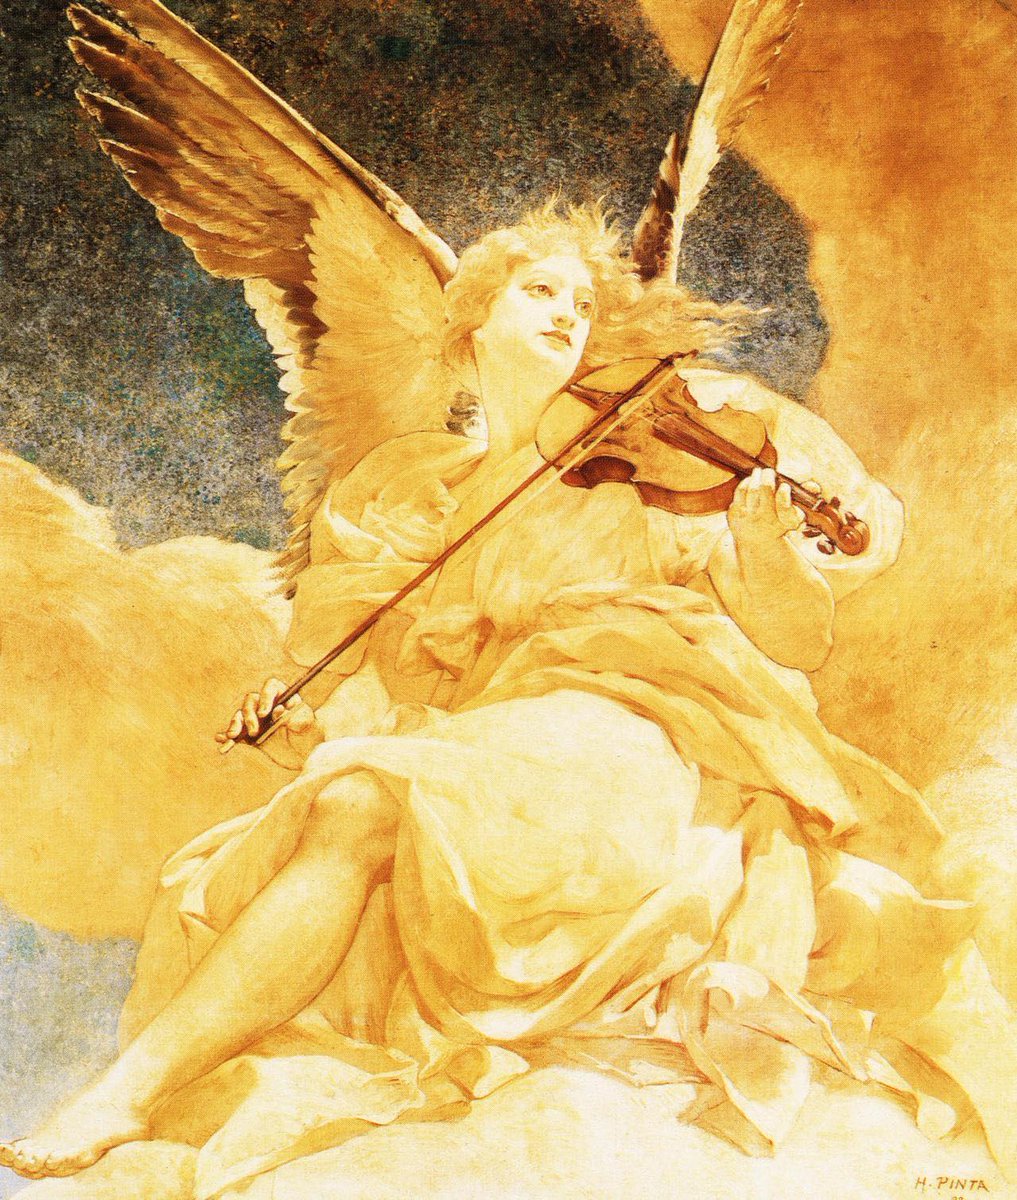 'L’ange musicien' (The Musician Angel), Henri Pinta, 1892